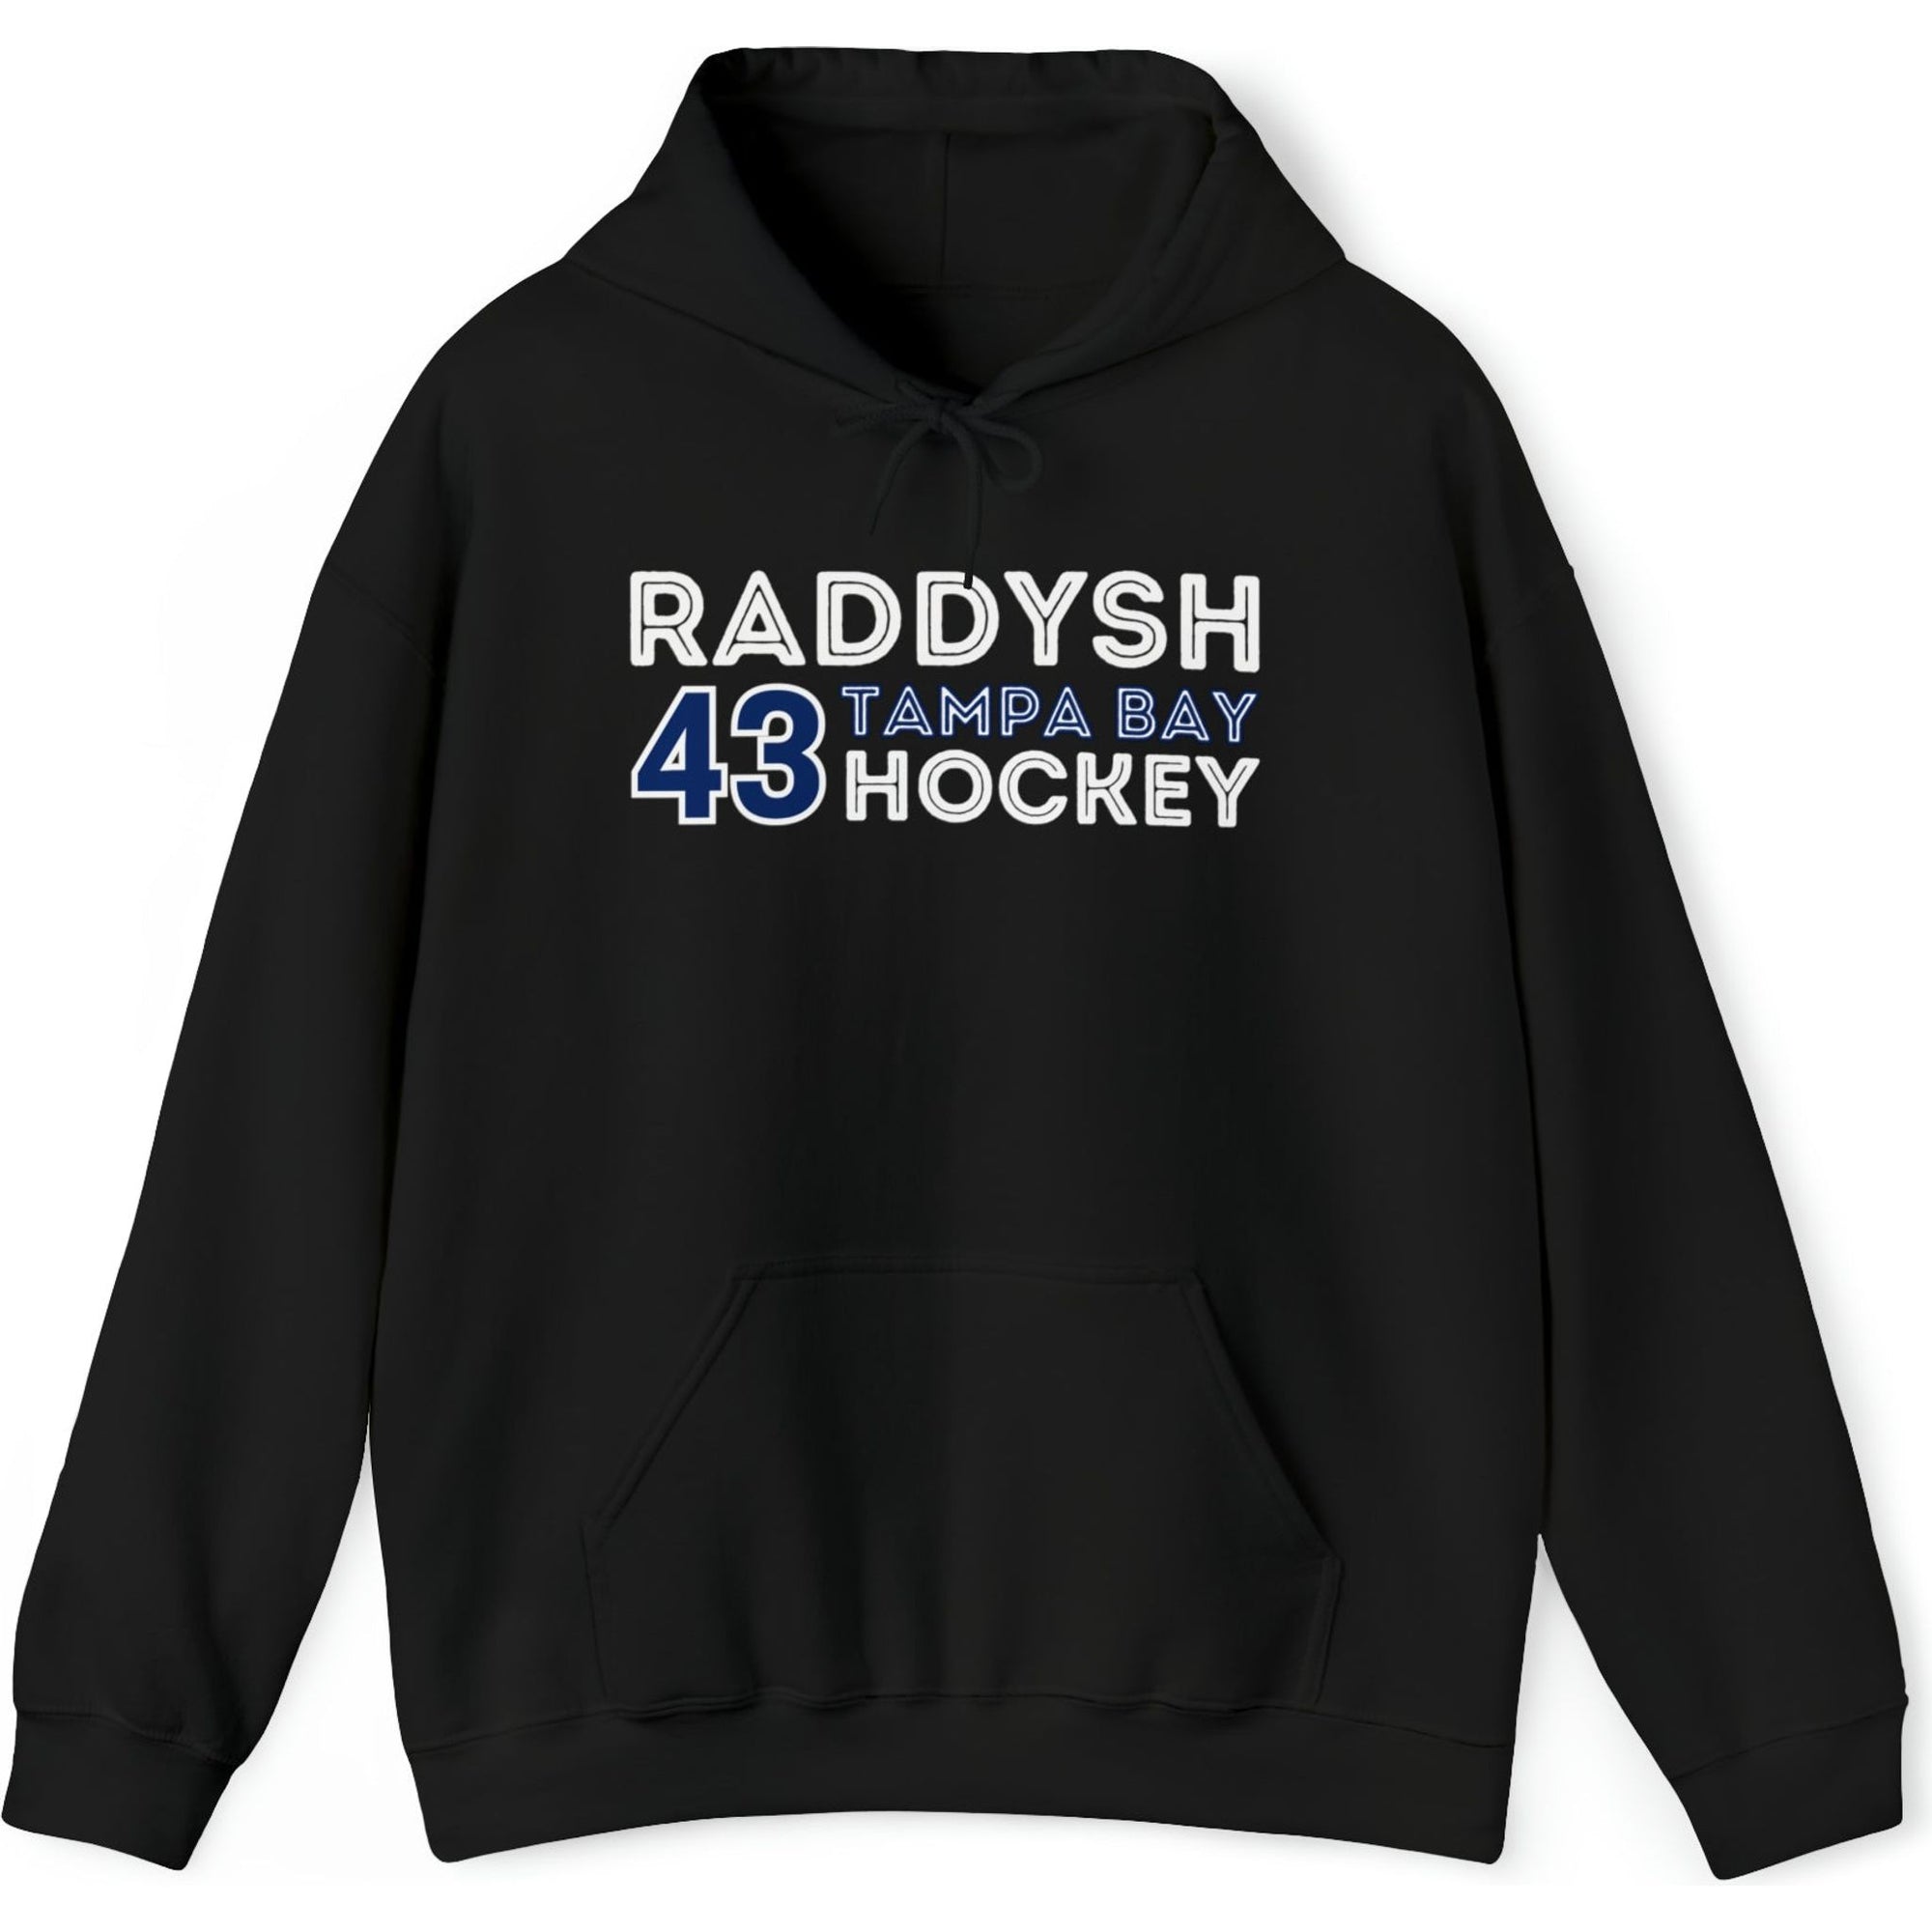 Raddysh 43 Tampa Bay Hockey Grafitti Wall Design Unisex Hooded Sweatshirt